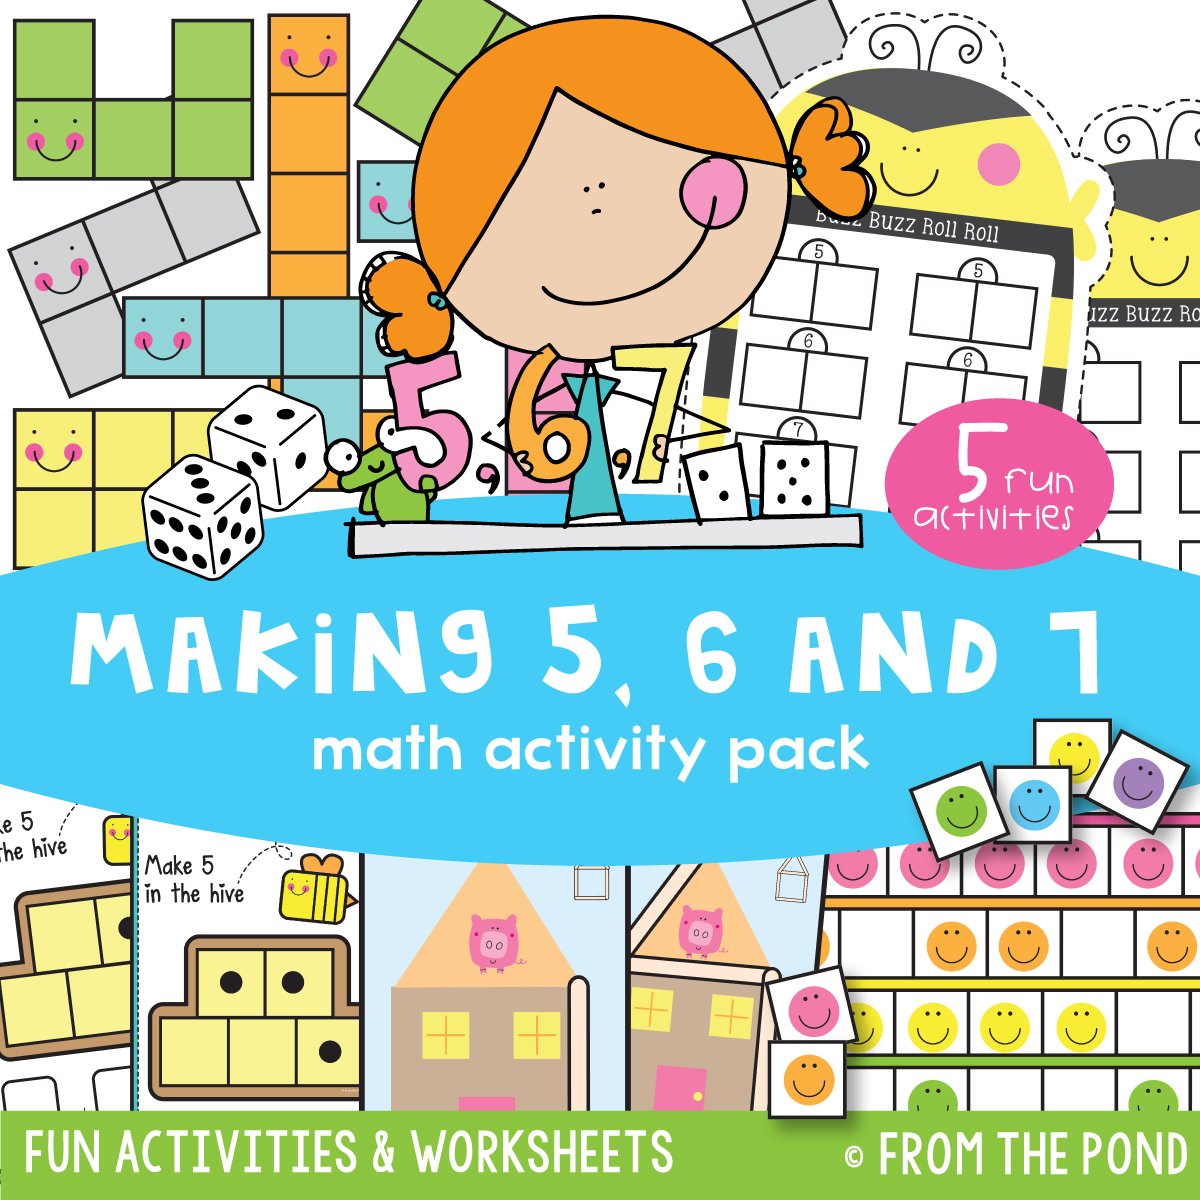 making-5-6-7-math-pack-pic-01.jpg